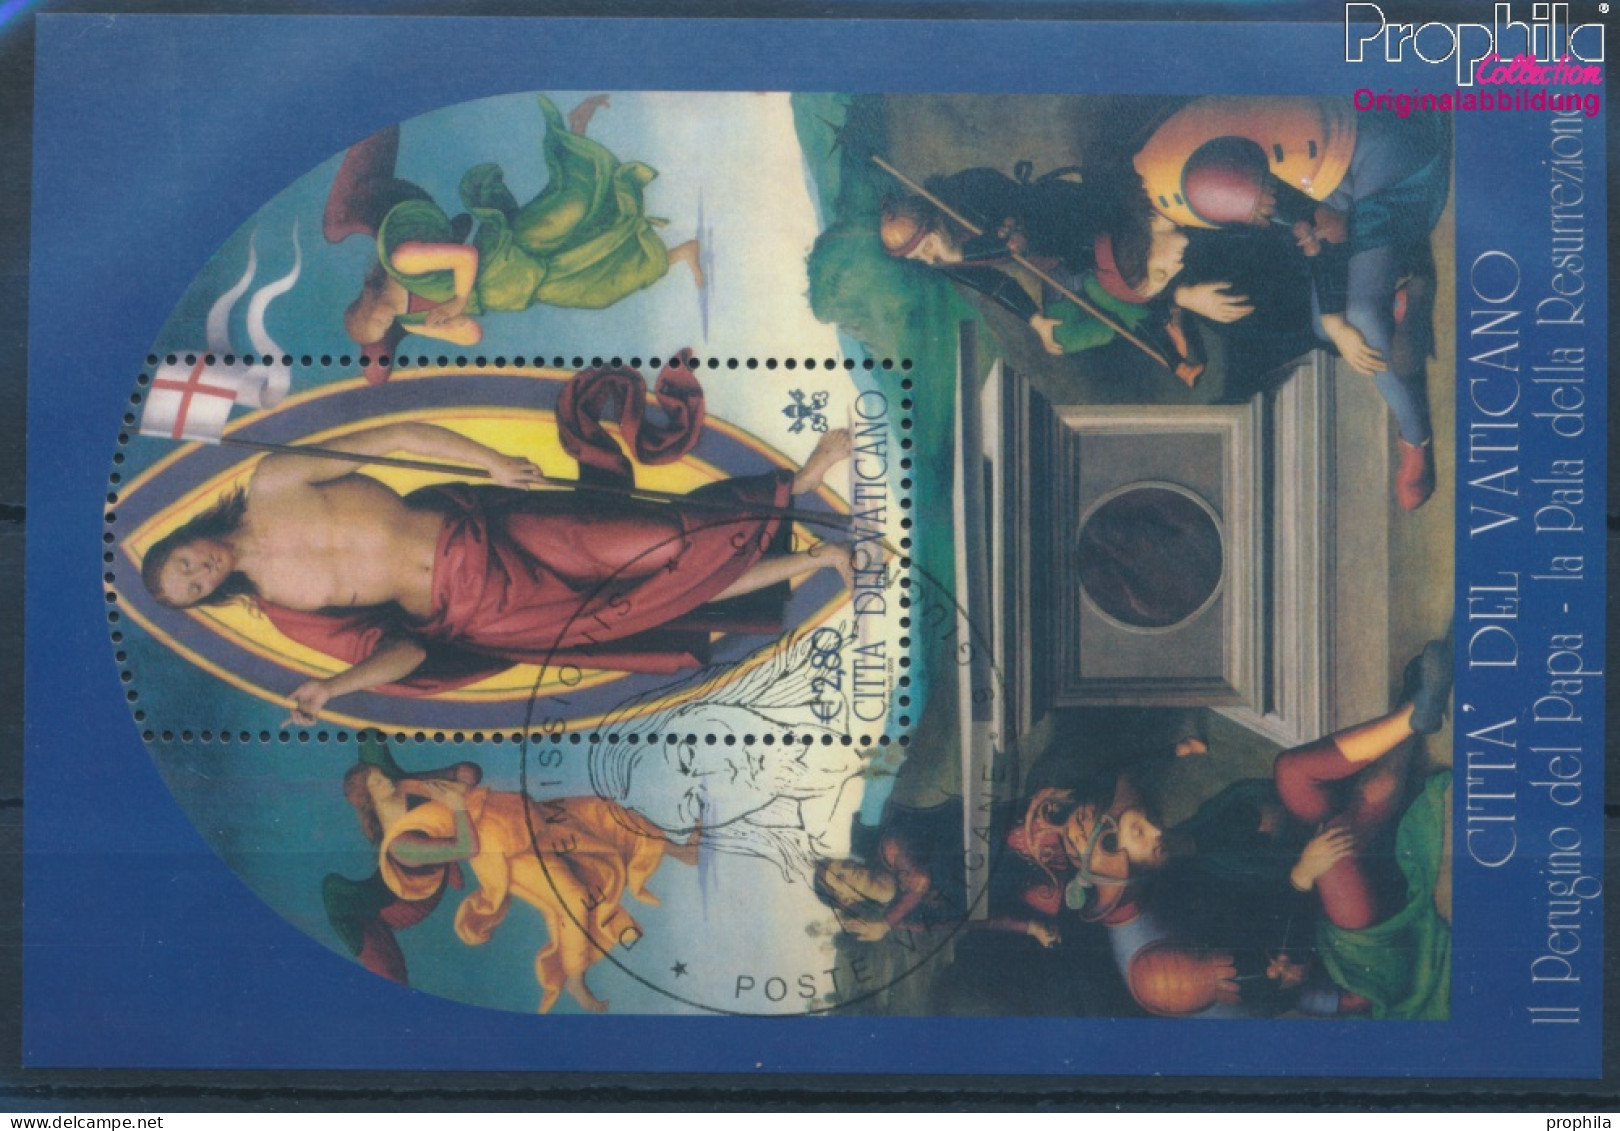 Vatikanstadt Block25 (kompl.Ausg.) Gestempelt 2005 Altarbild Des Perugino (10352368 - Used Stamps